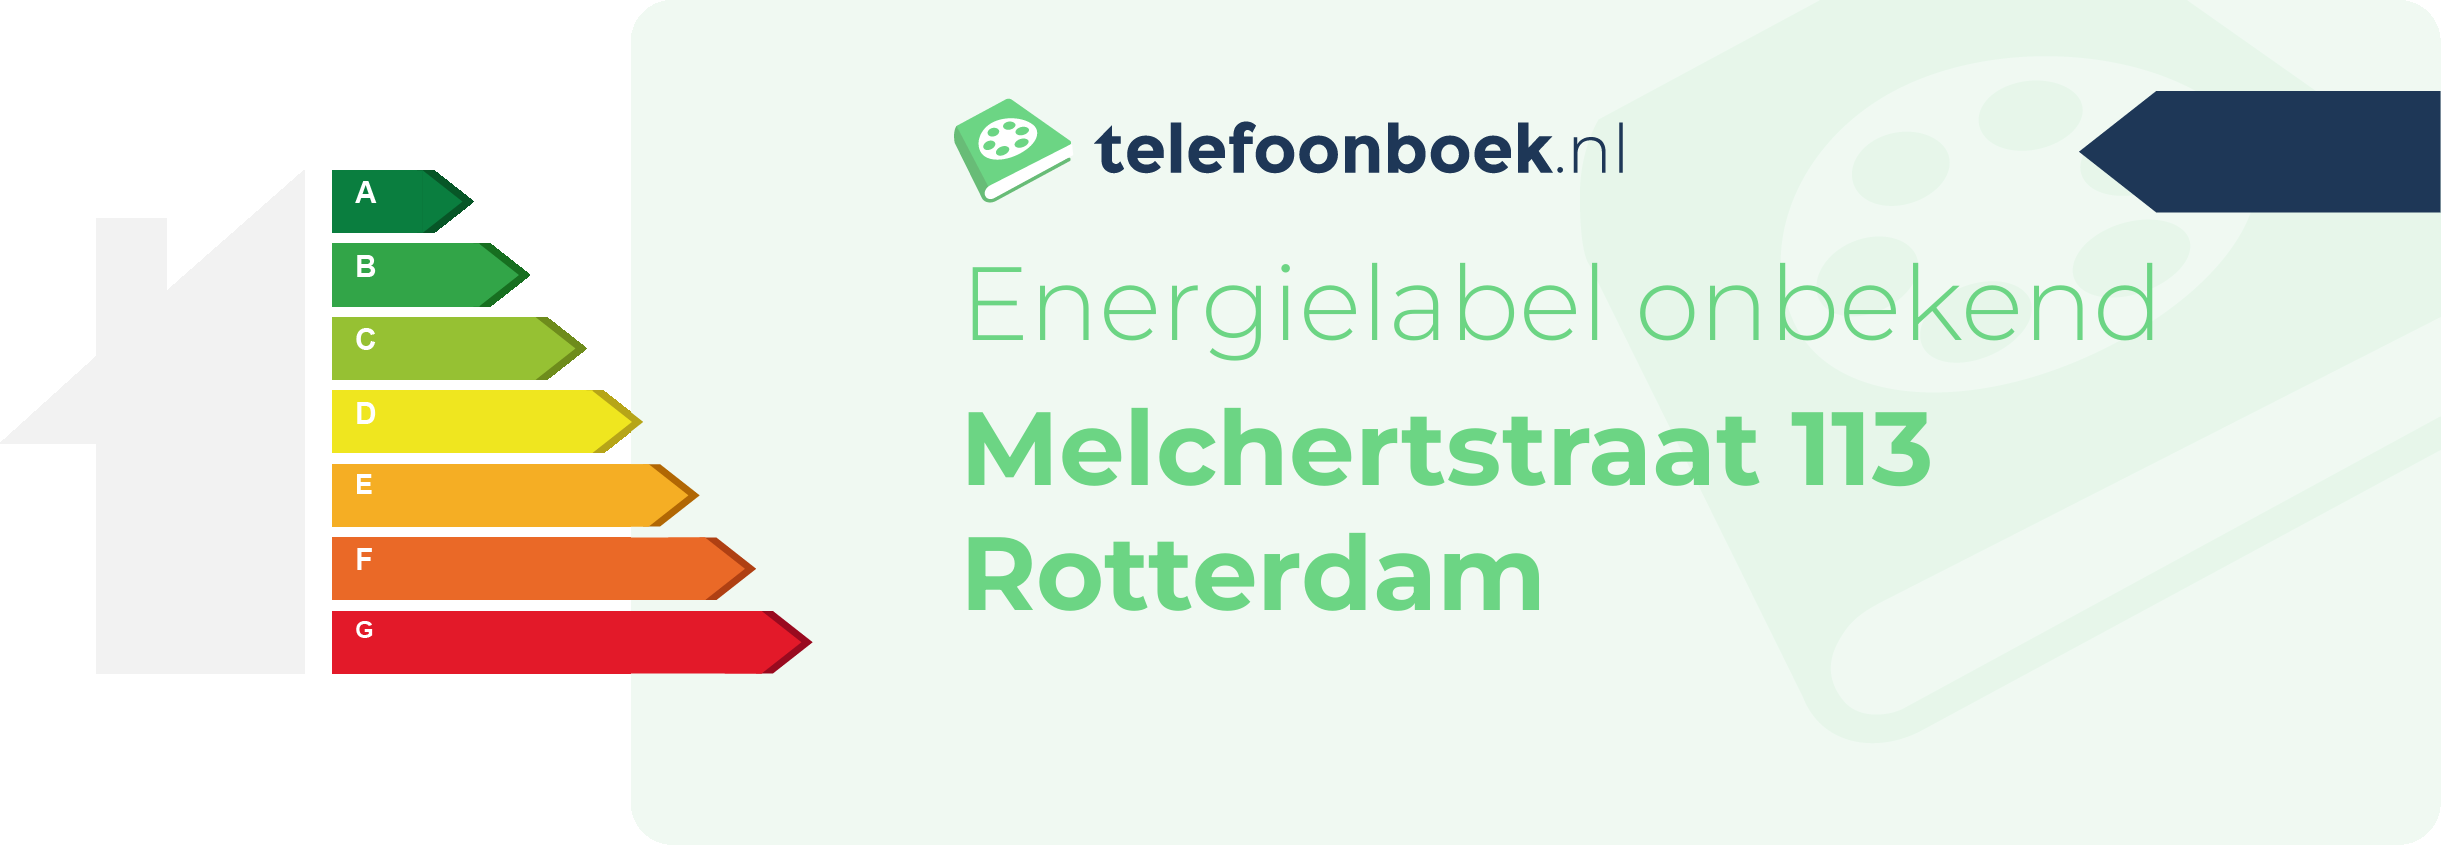 Energielabel Melchertstraat 113 Rotterdam